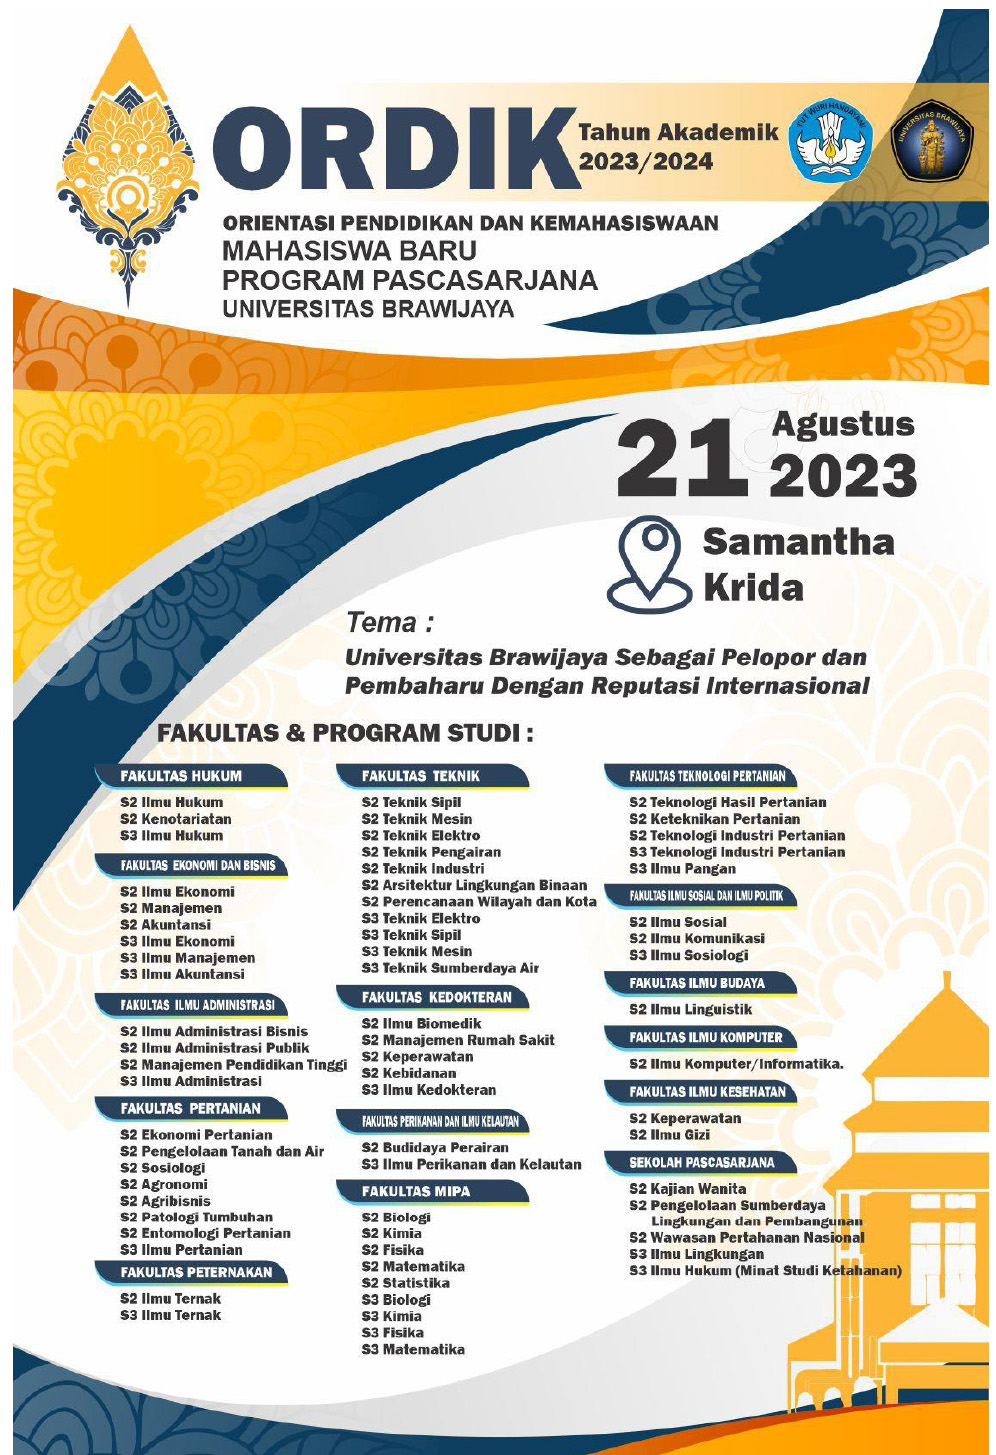 Implementation of Student Orientation Postgraduate Program Students in Universitas Brawijaya TA. 2023/2024